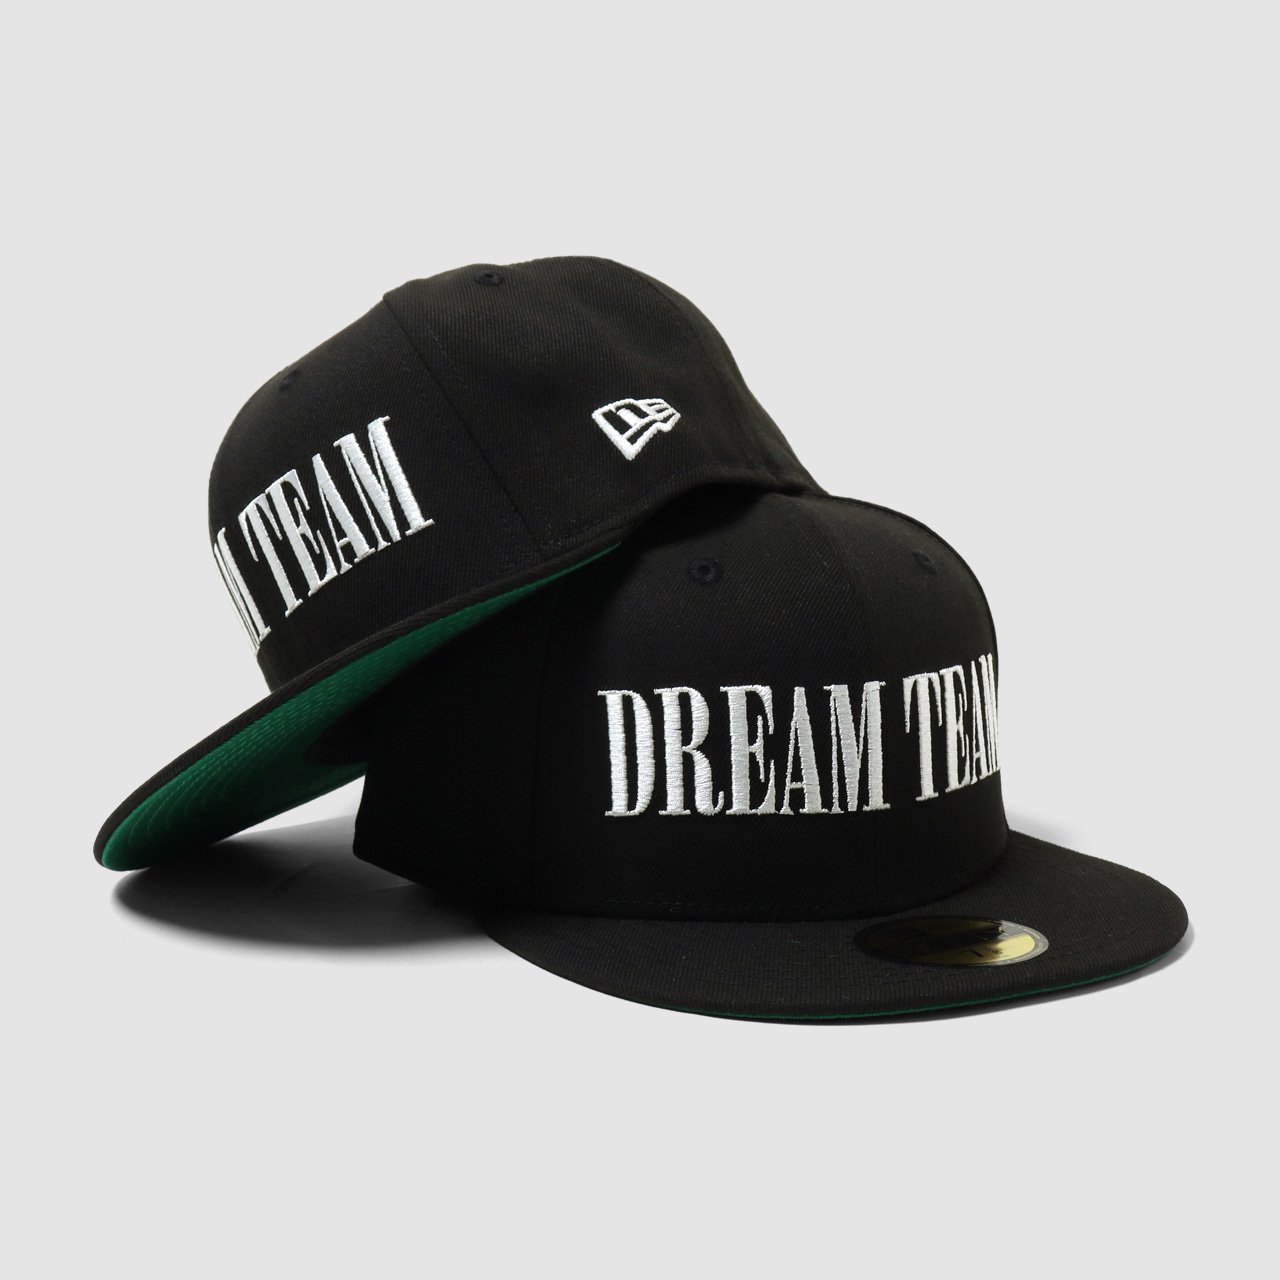 Basic DREAMTEAM Logo New Era 59Fifty Fitted Cap Black